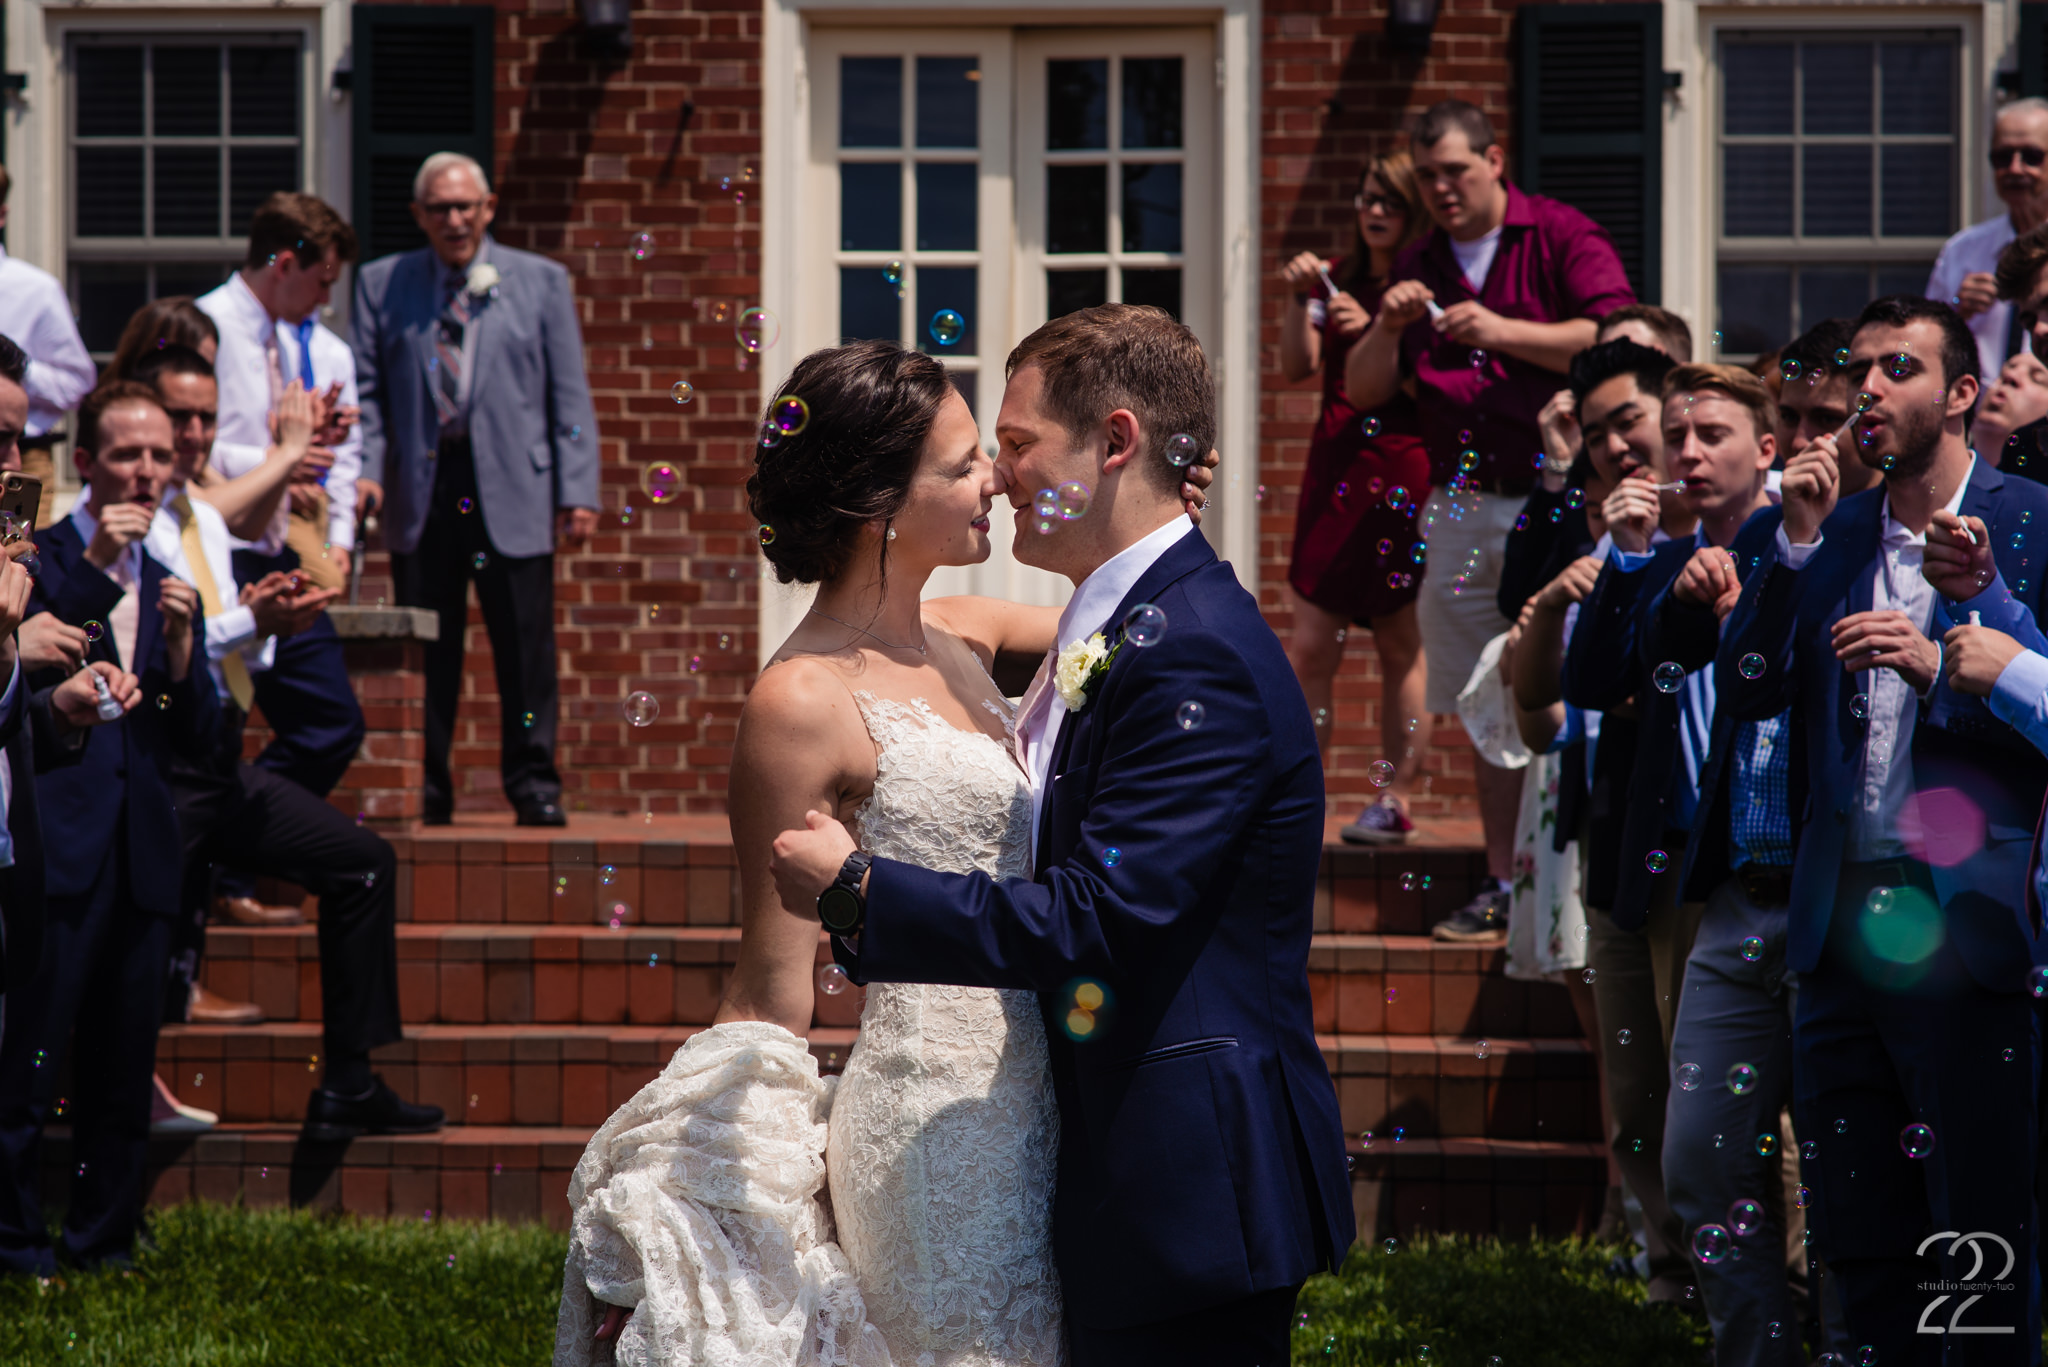  This wedding at French Park in Cincinnati blew everyone away. 